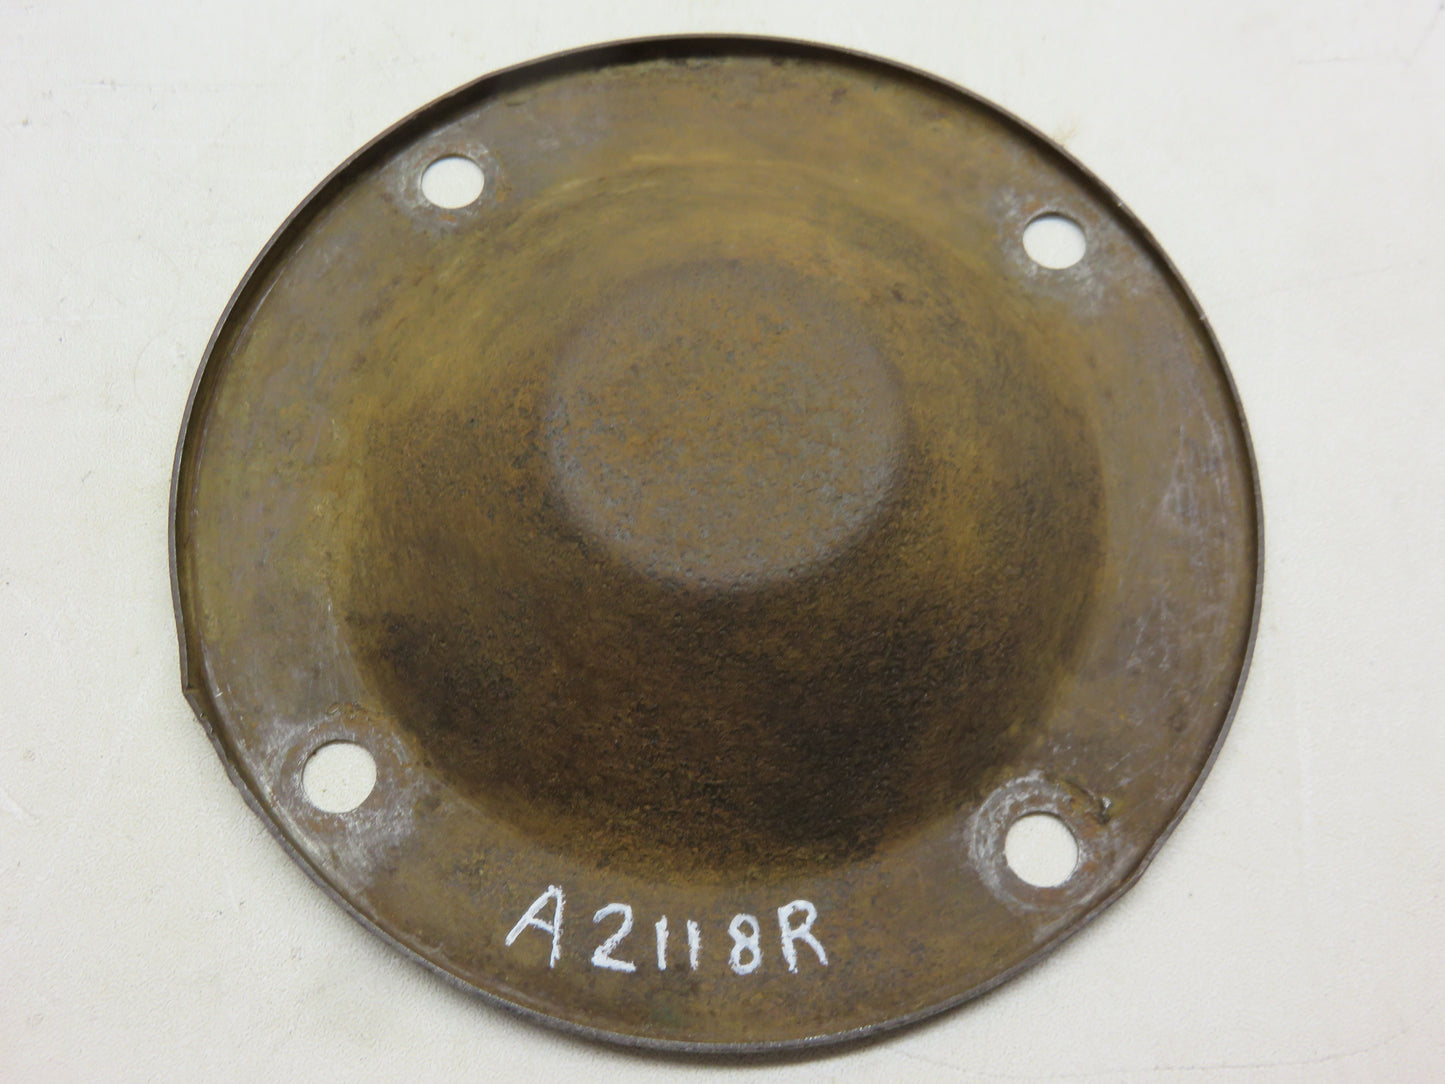 A2118R John Deere Steering Pedestal Cover For A